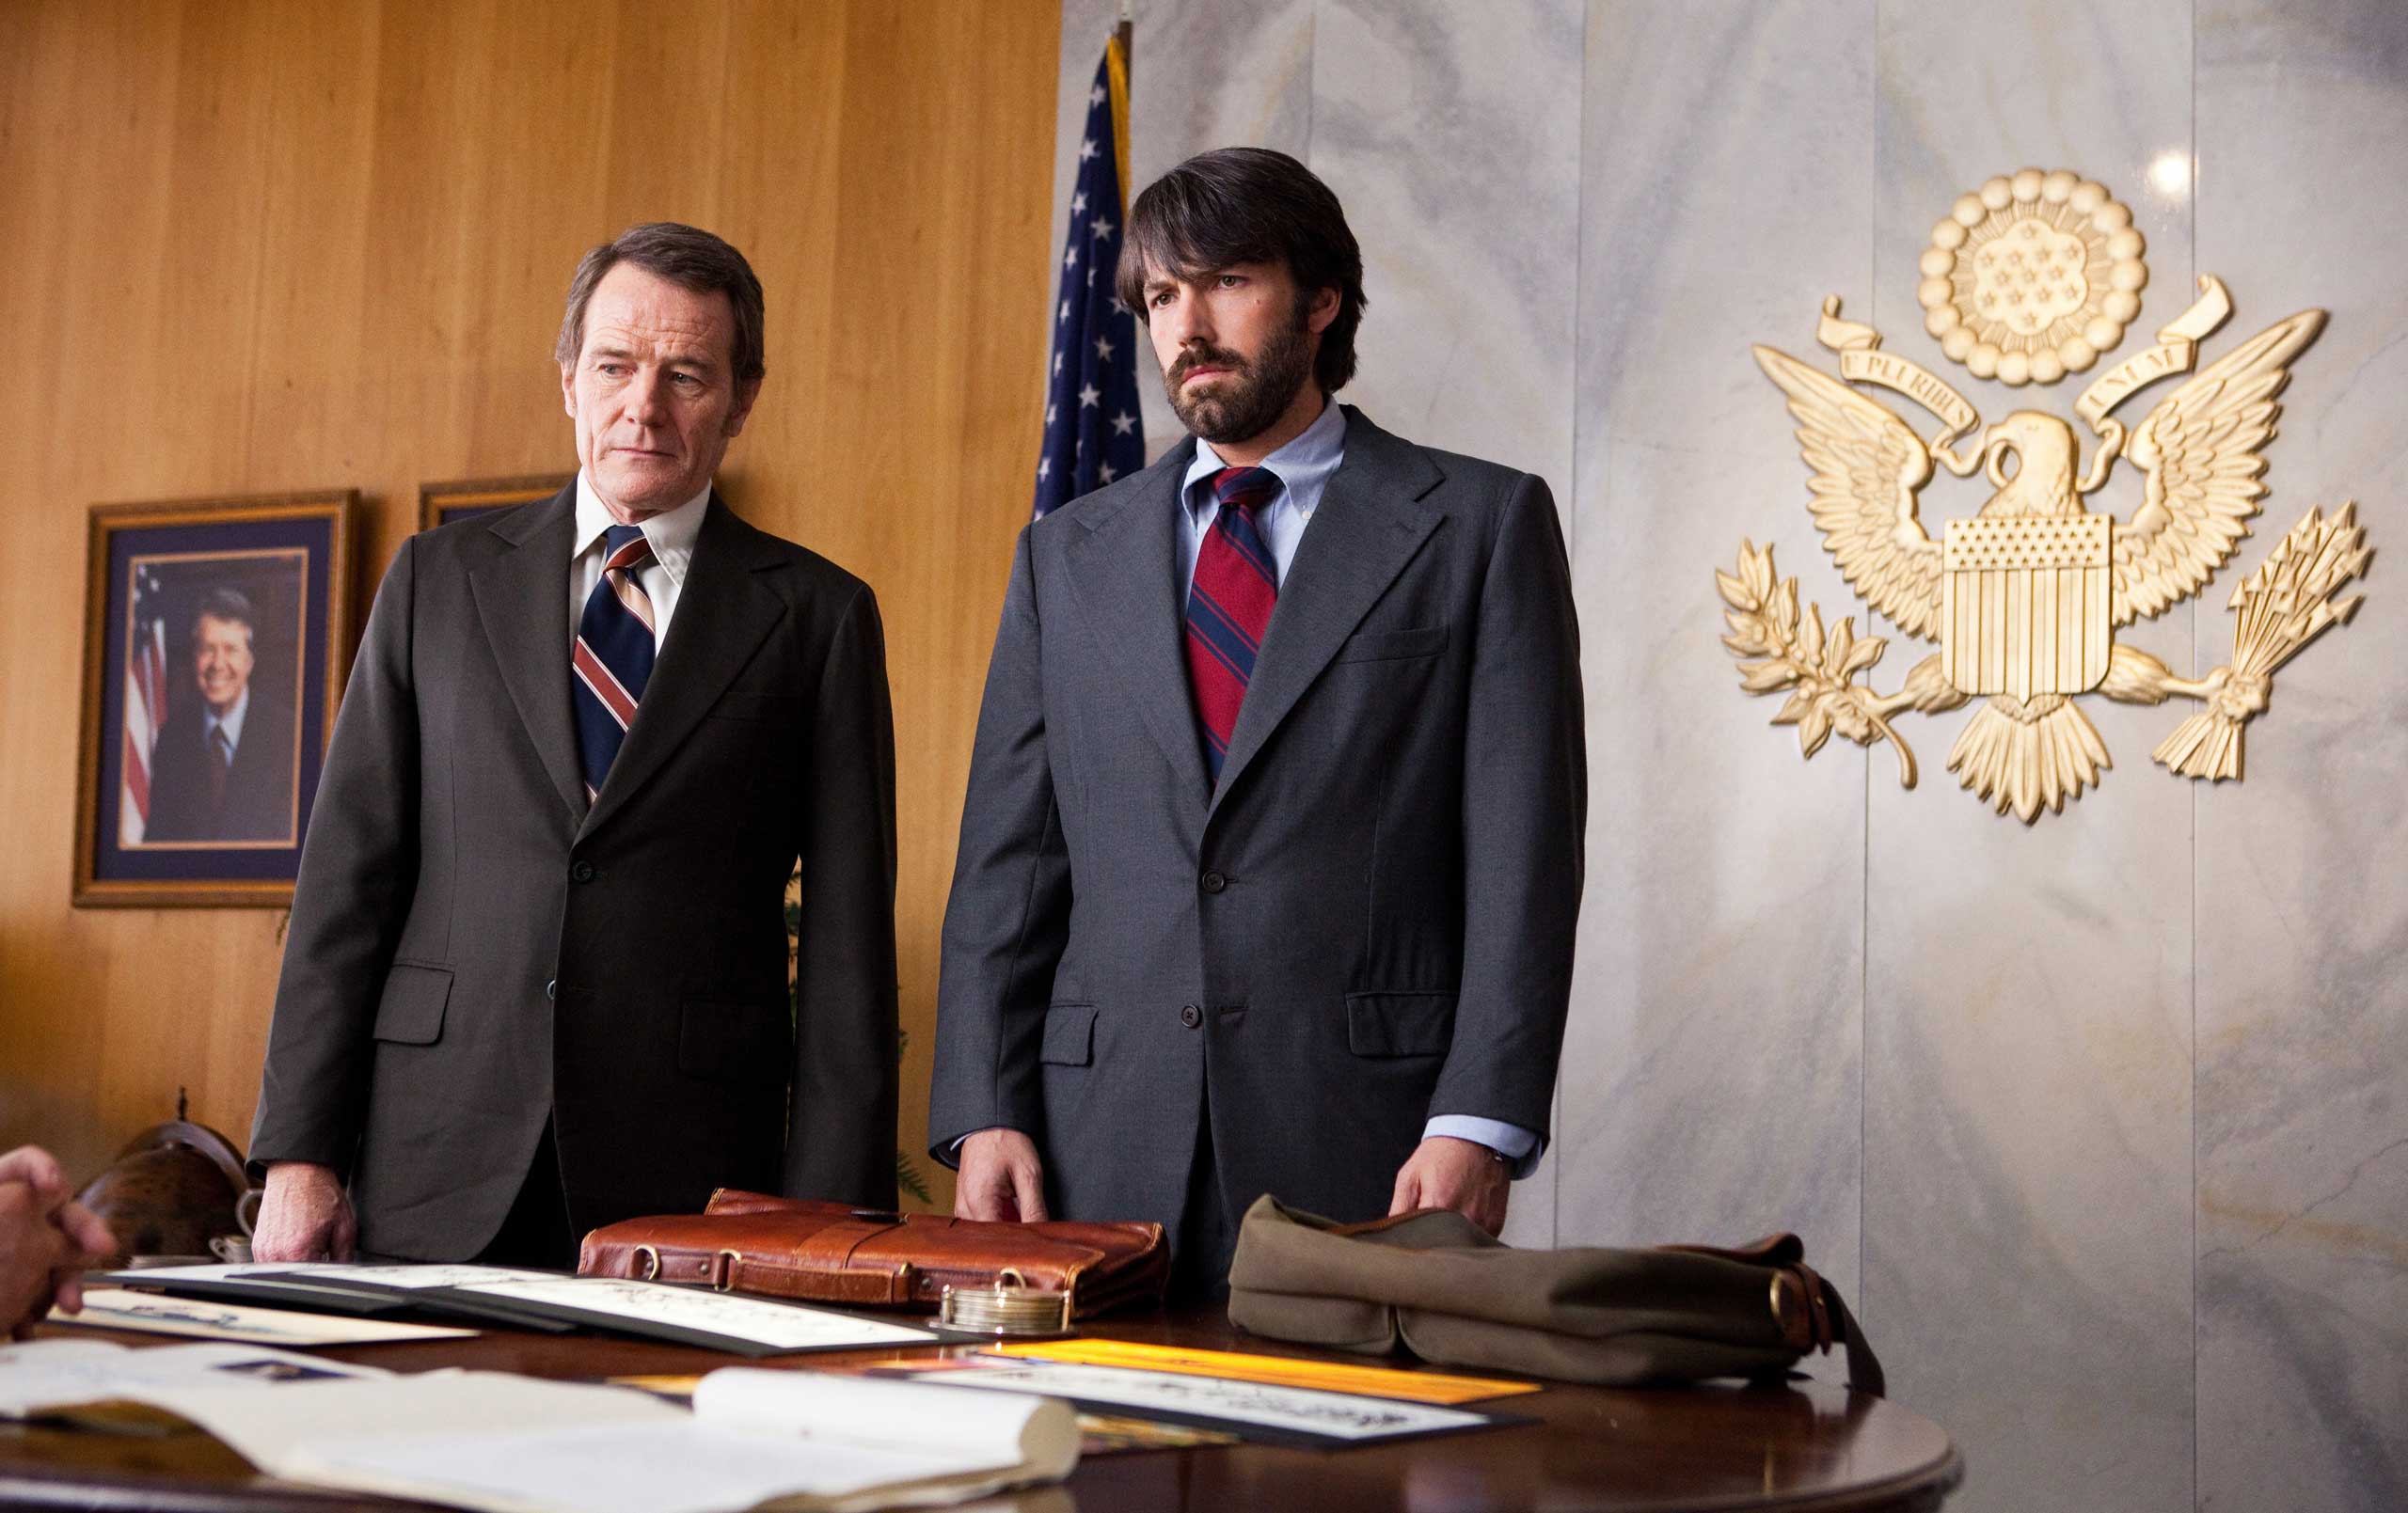 Bryan Cranston in 'Argo'